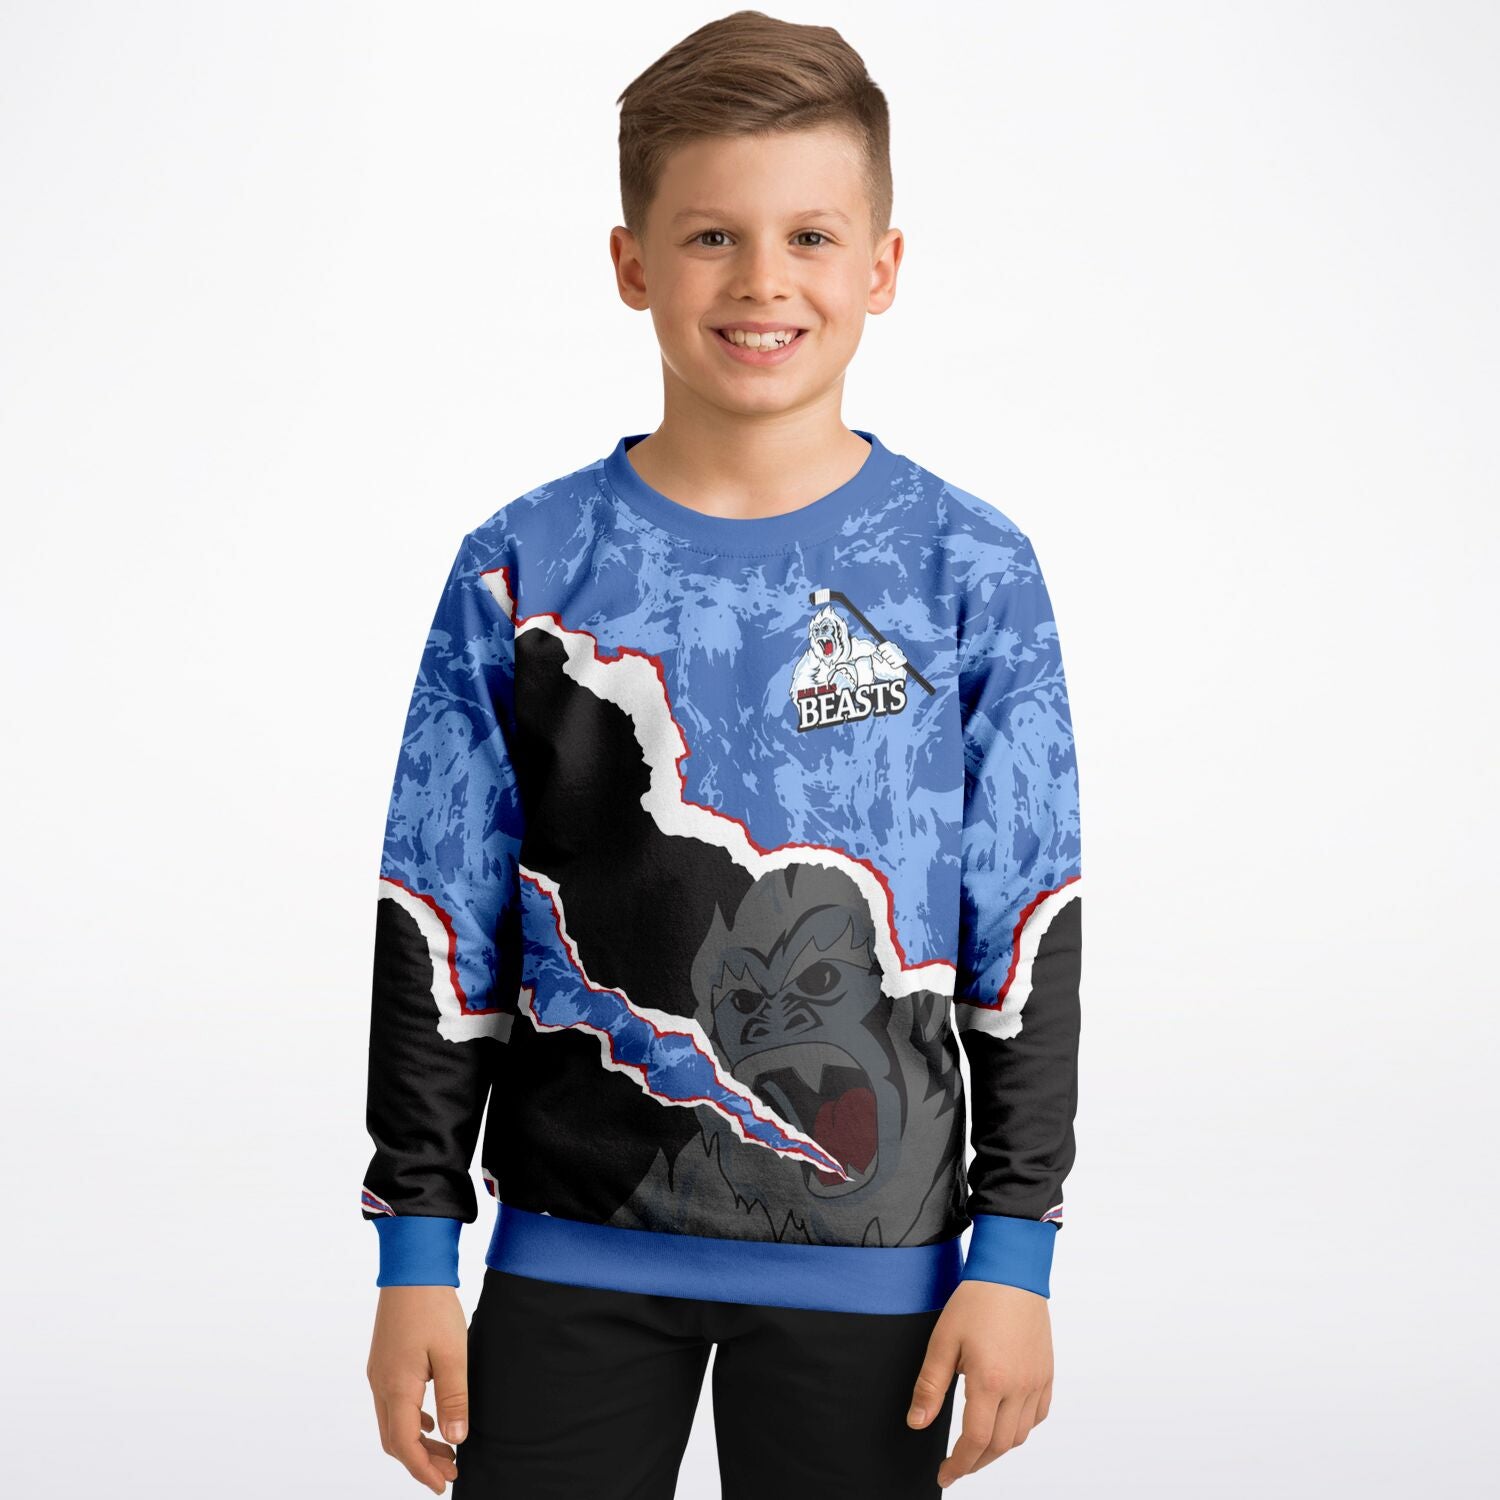 Blue Hills Beasts Kids/Youth Athletic Sweatshirt